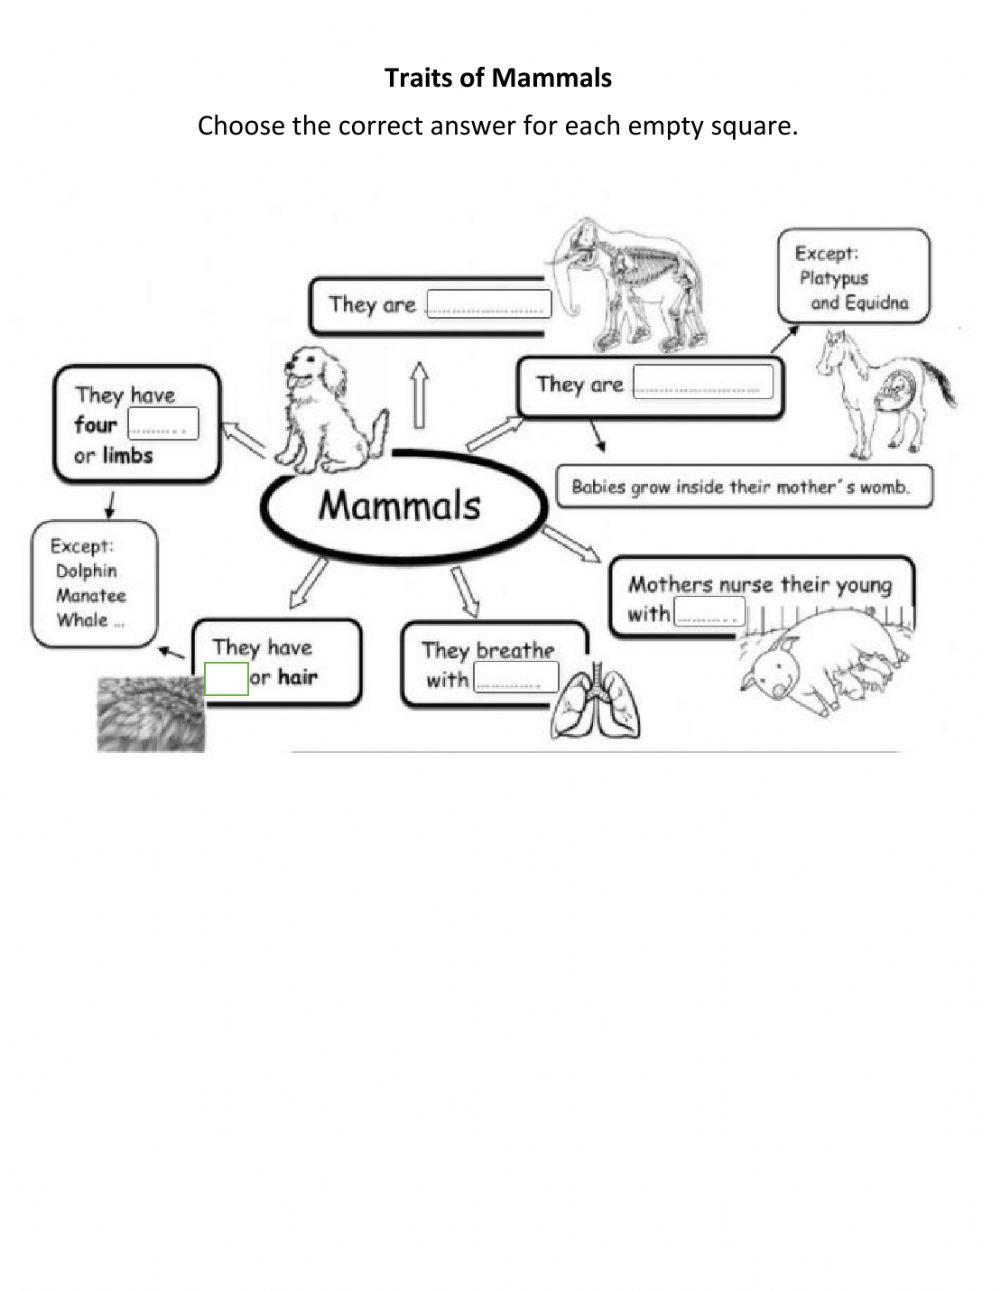 Traits of Mammals